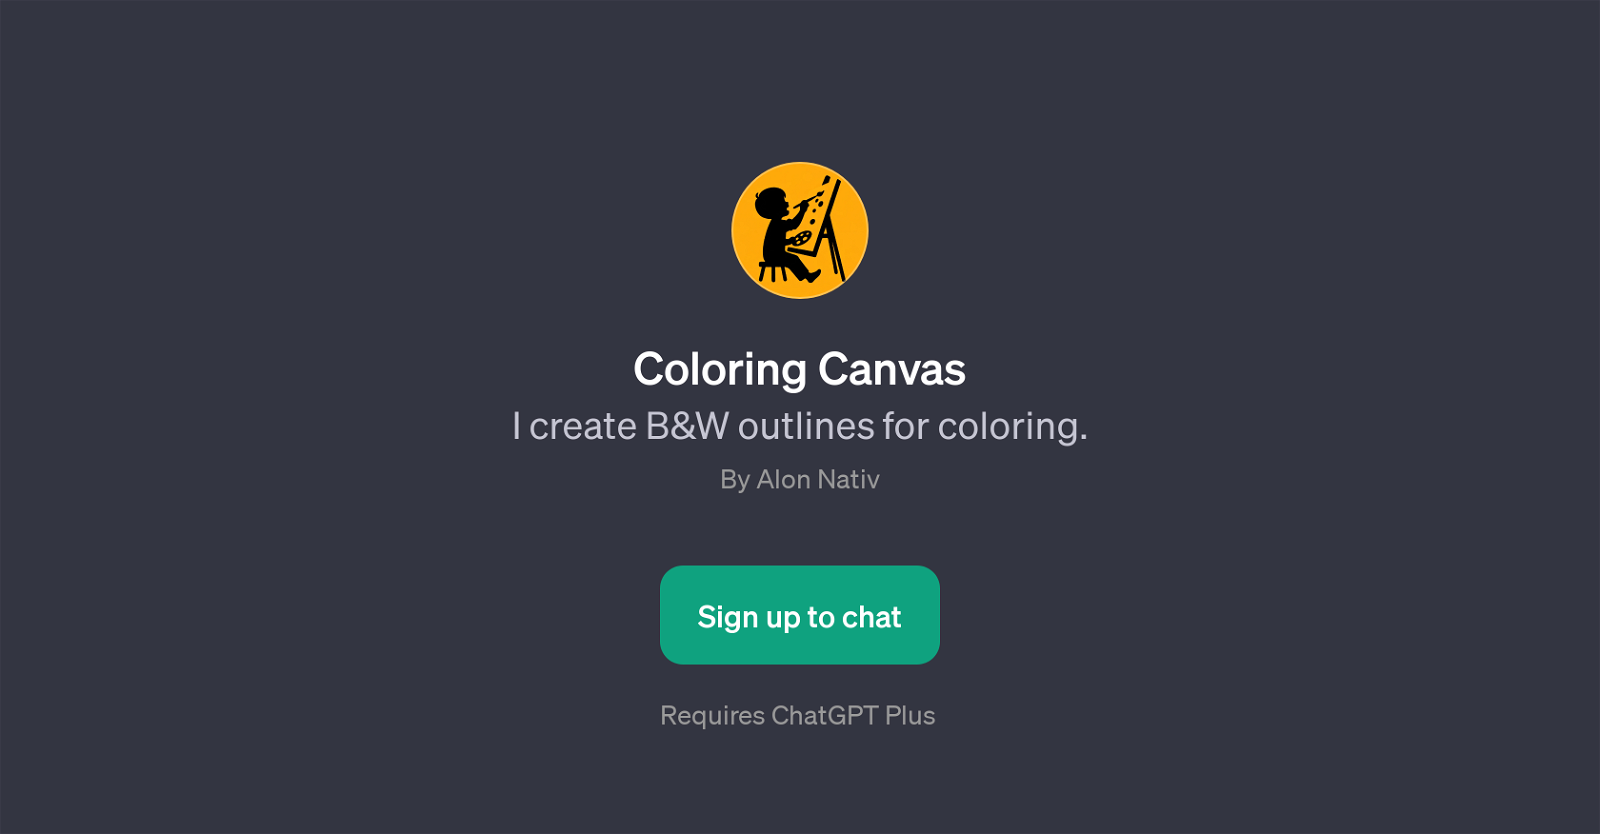 Coloring Canvas website